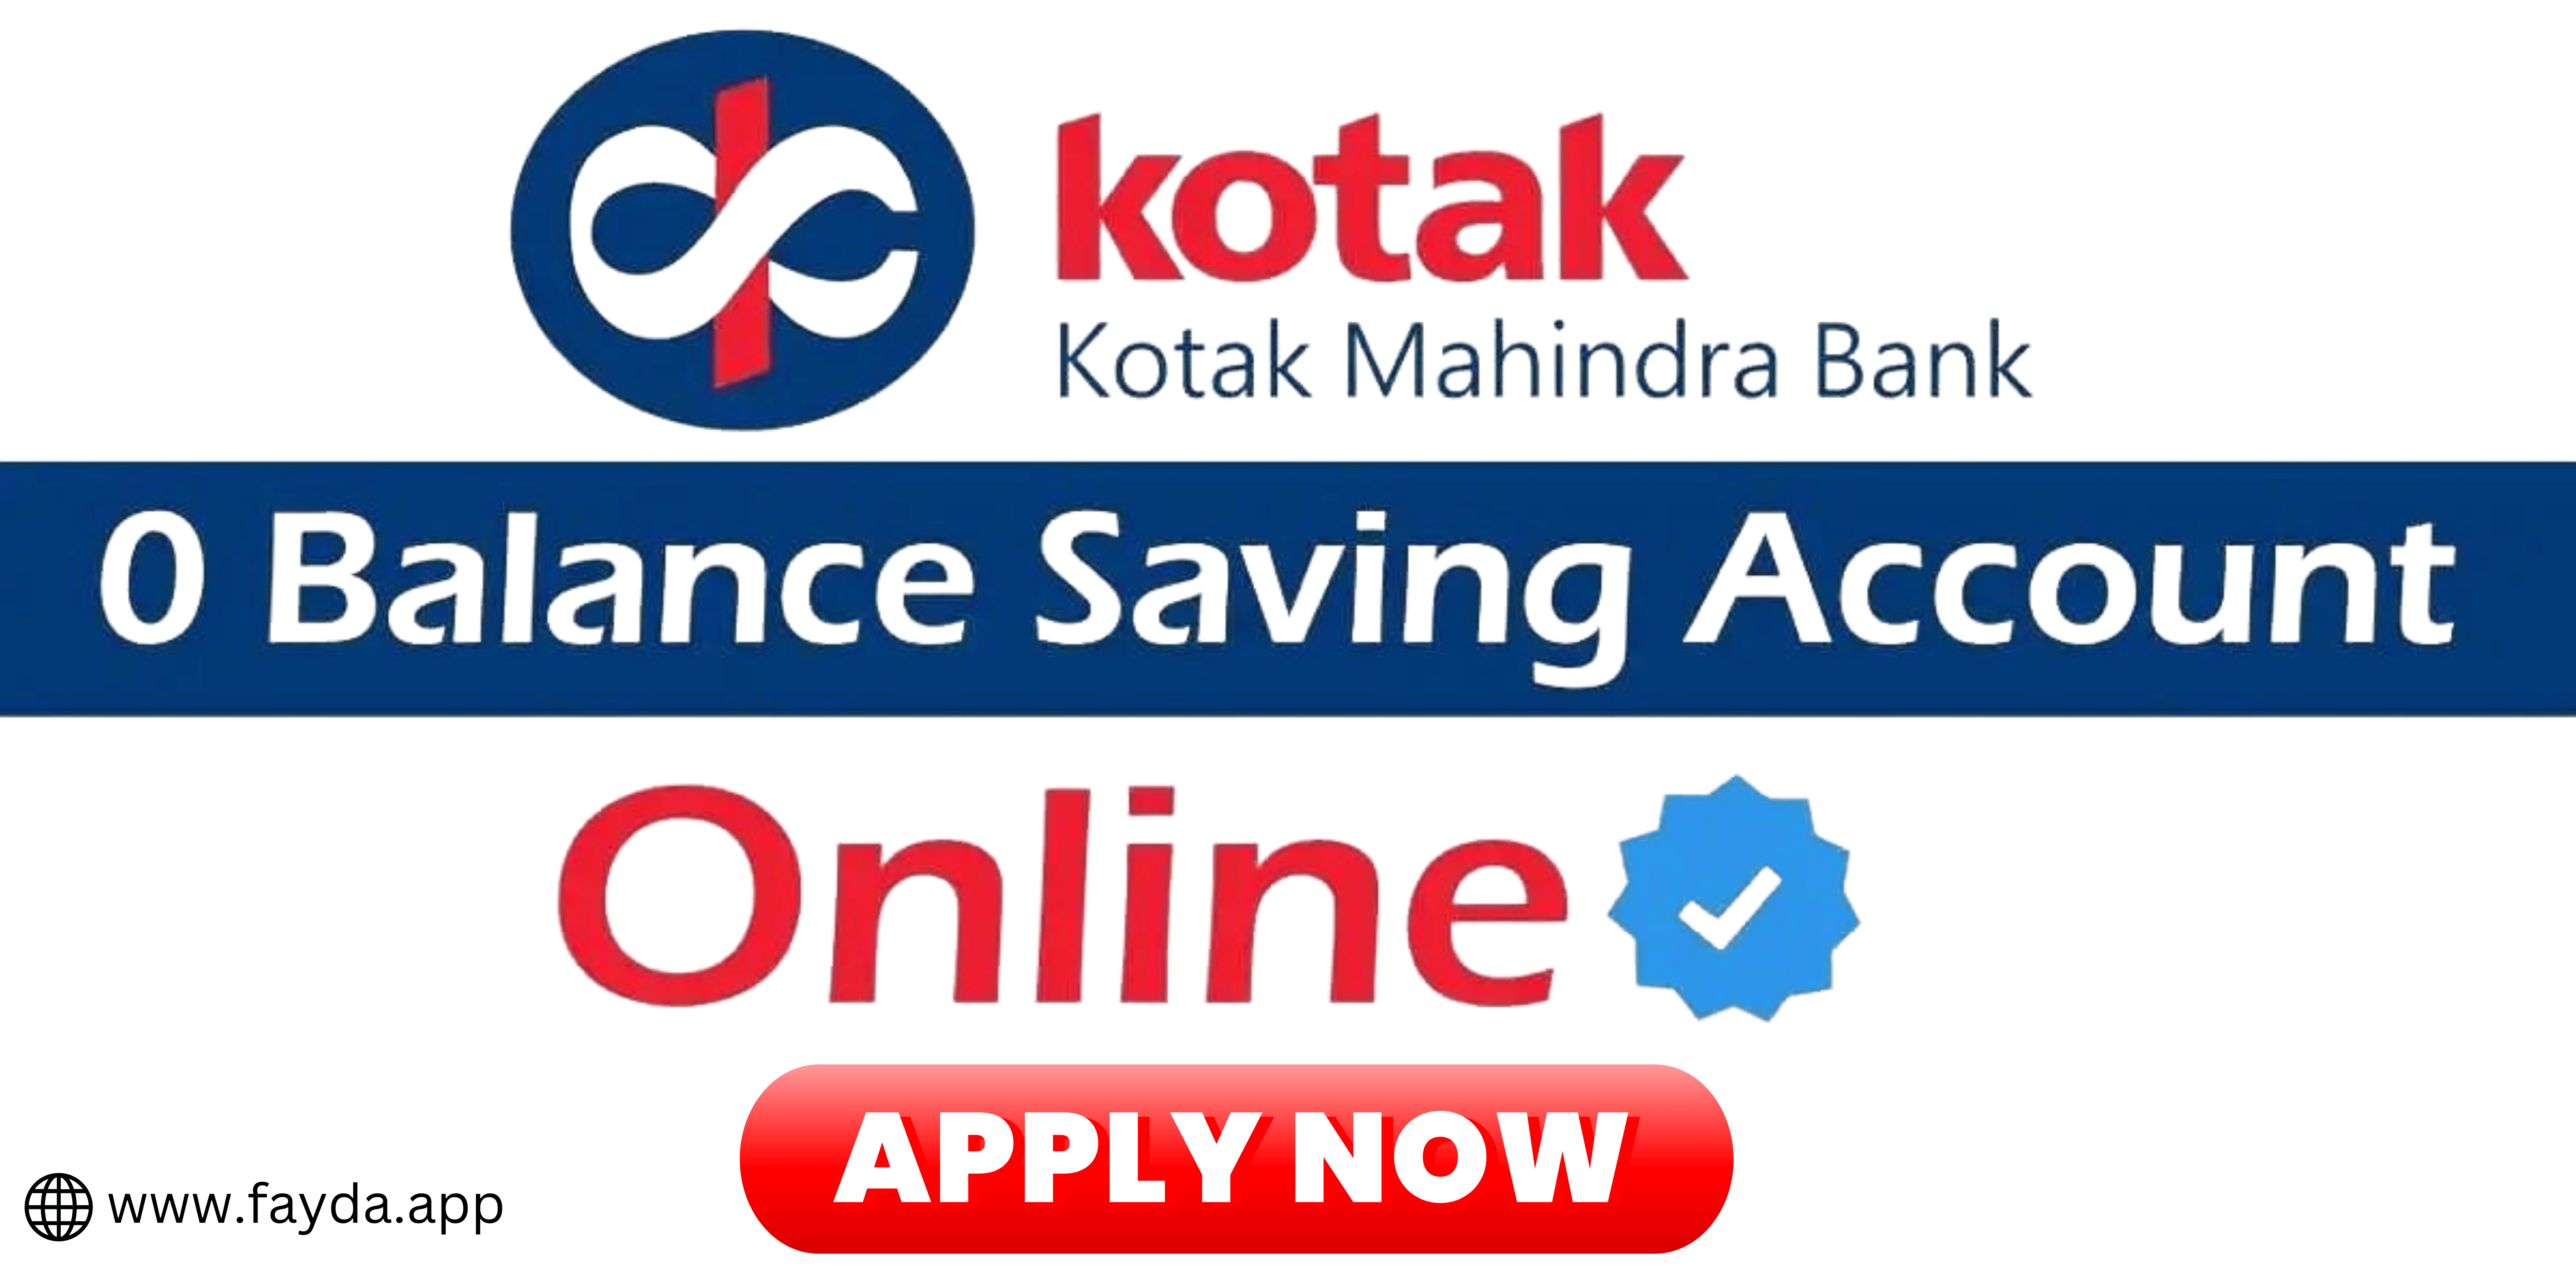 How can I open Kotak 0 balance savings account online